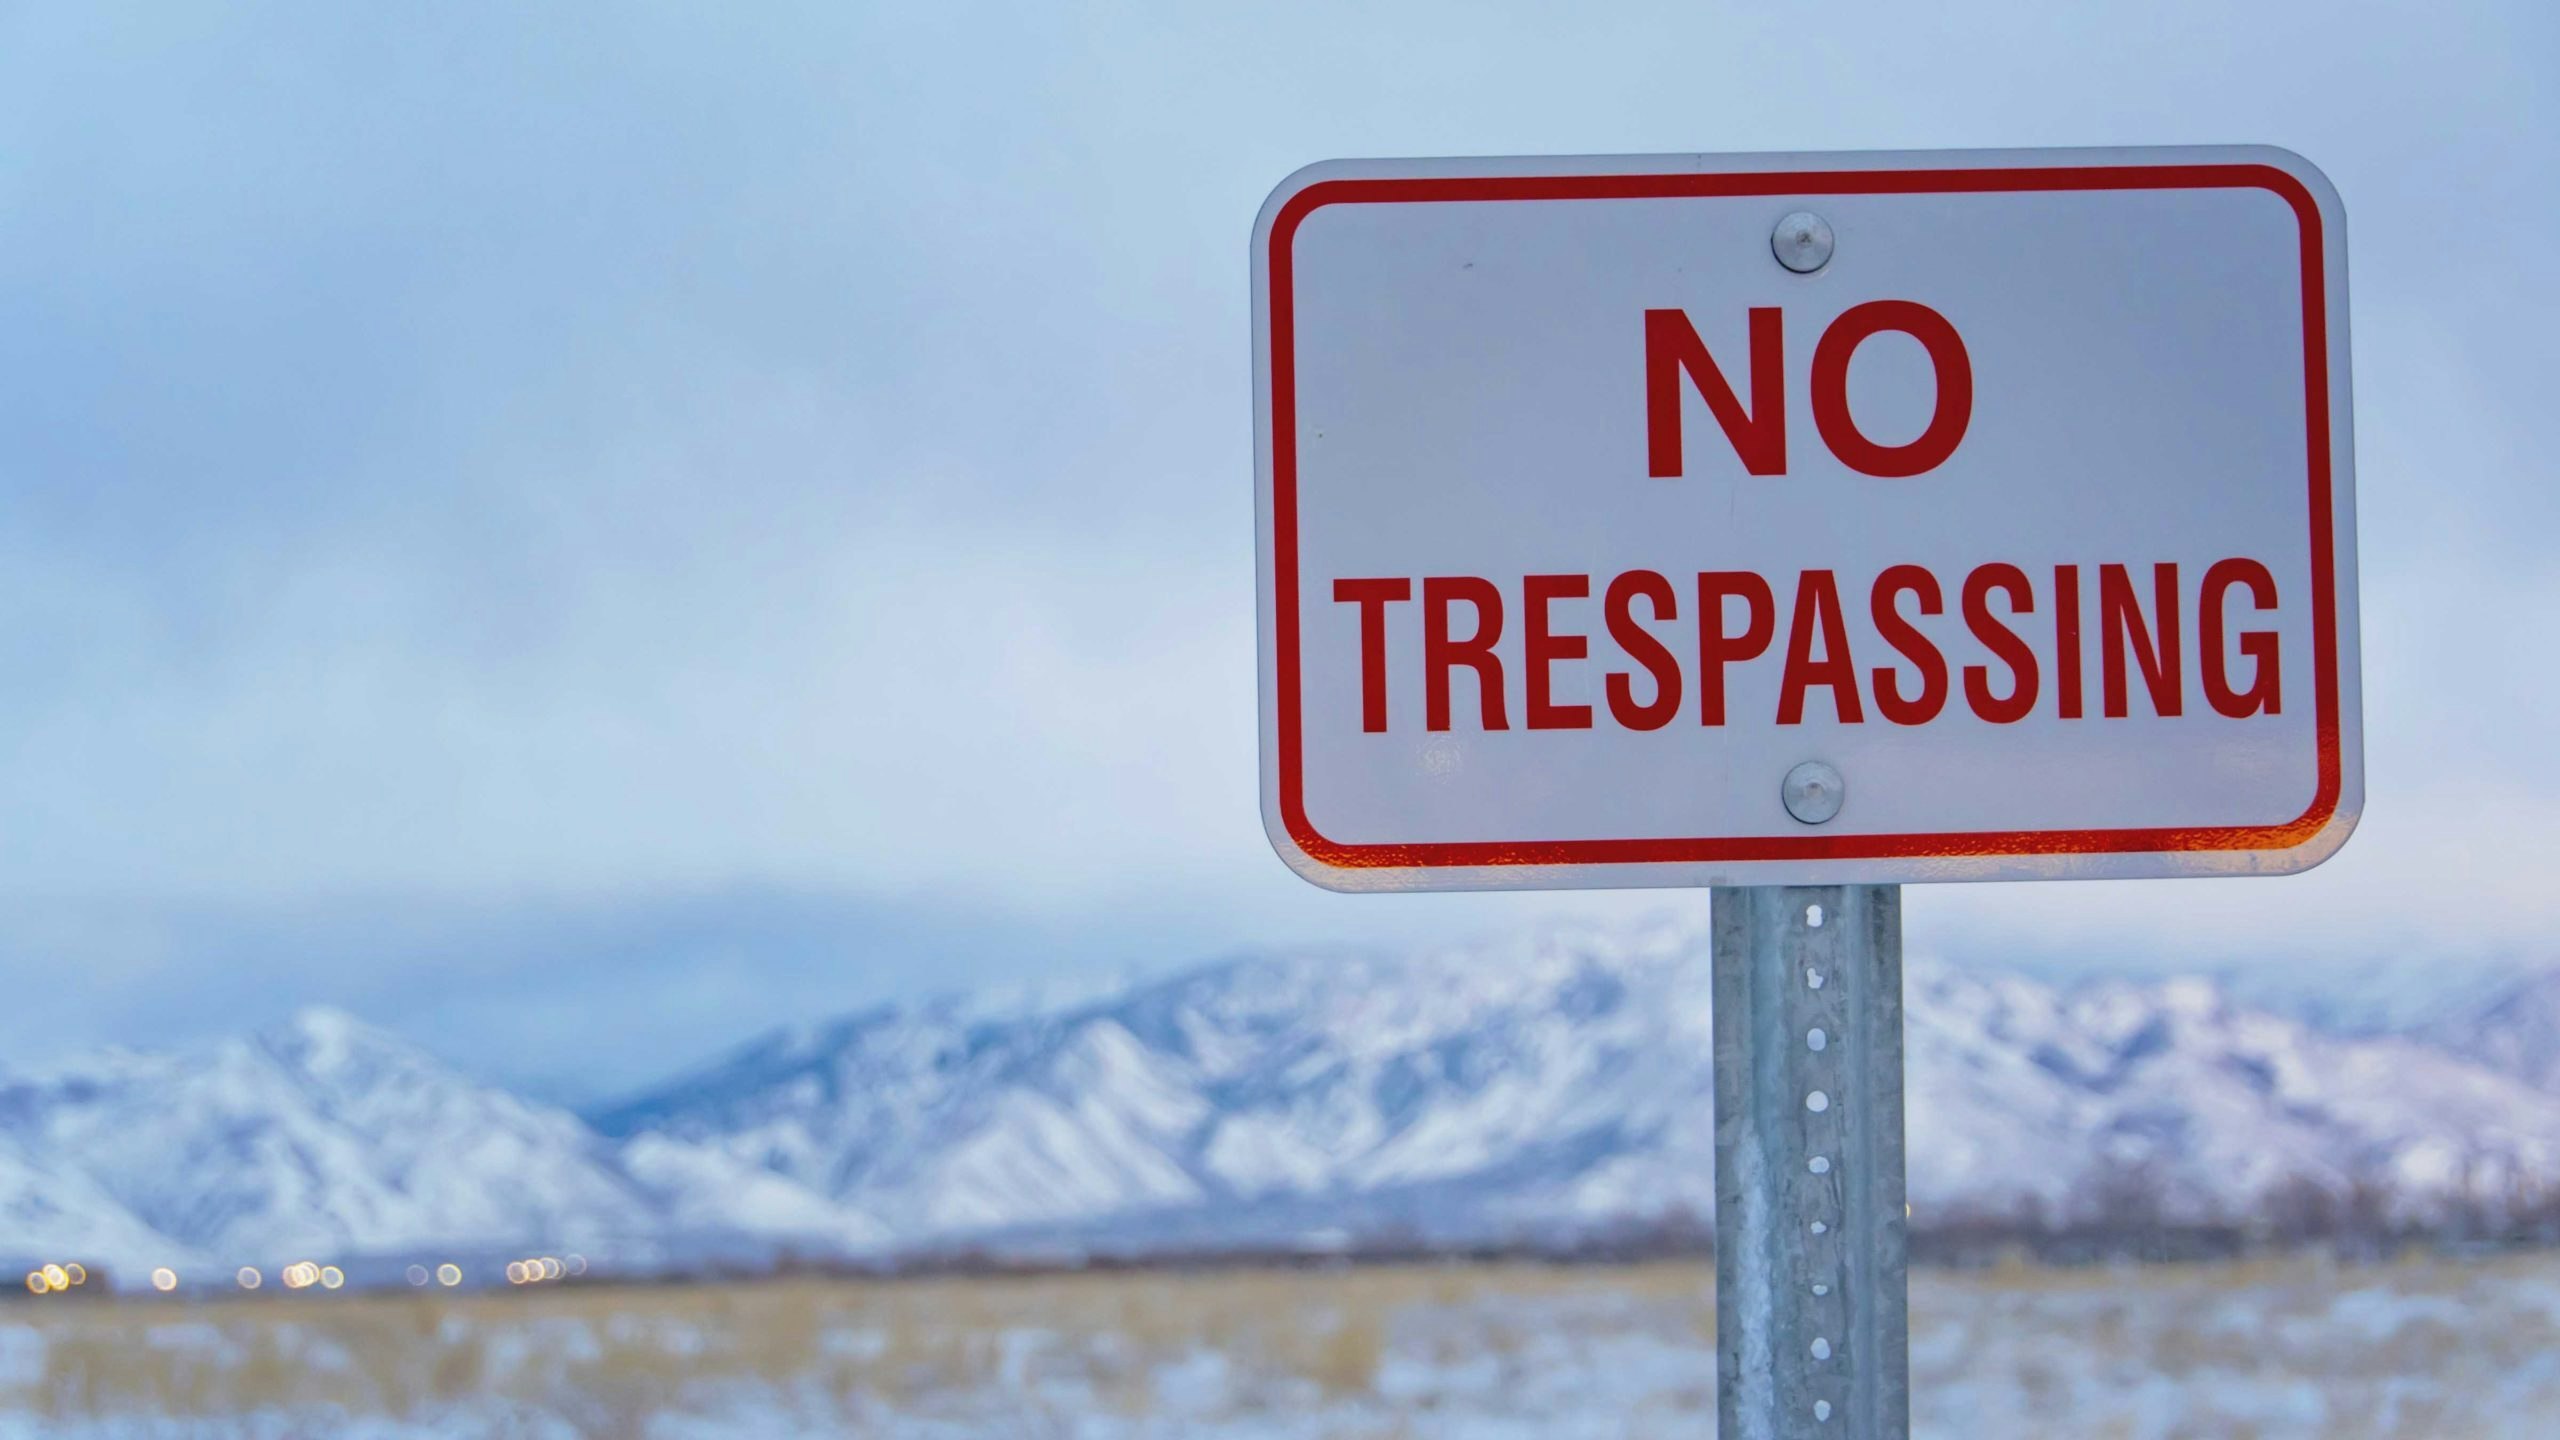 No trespassing 1 24 23 scaled